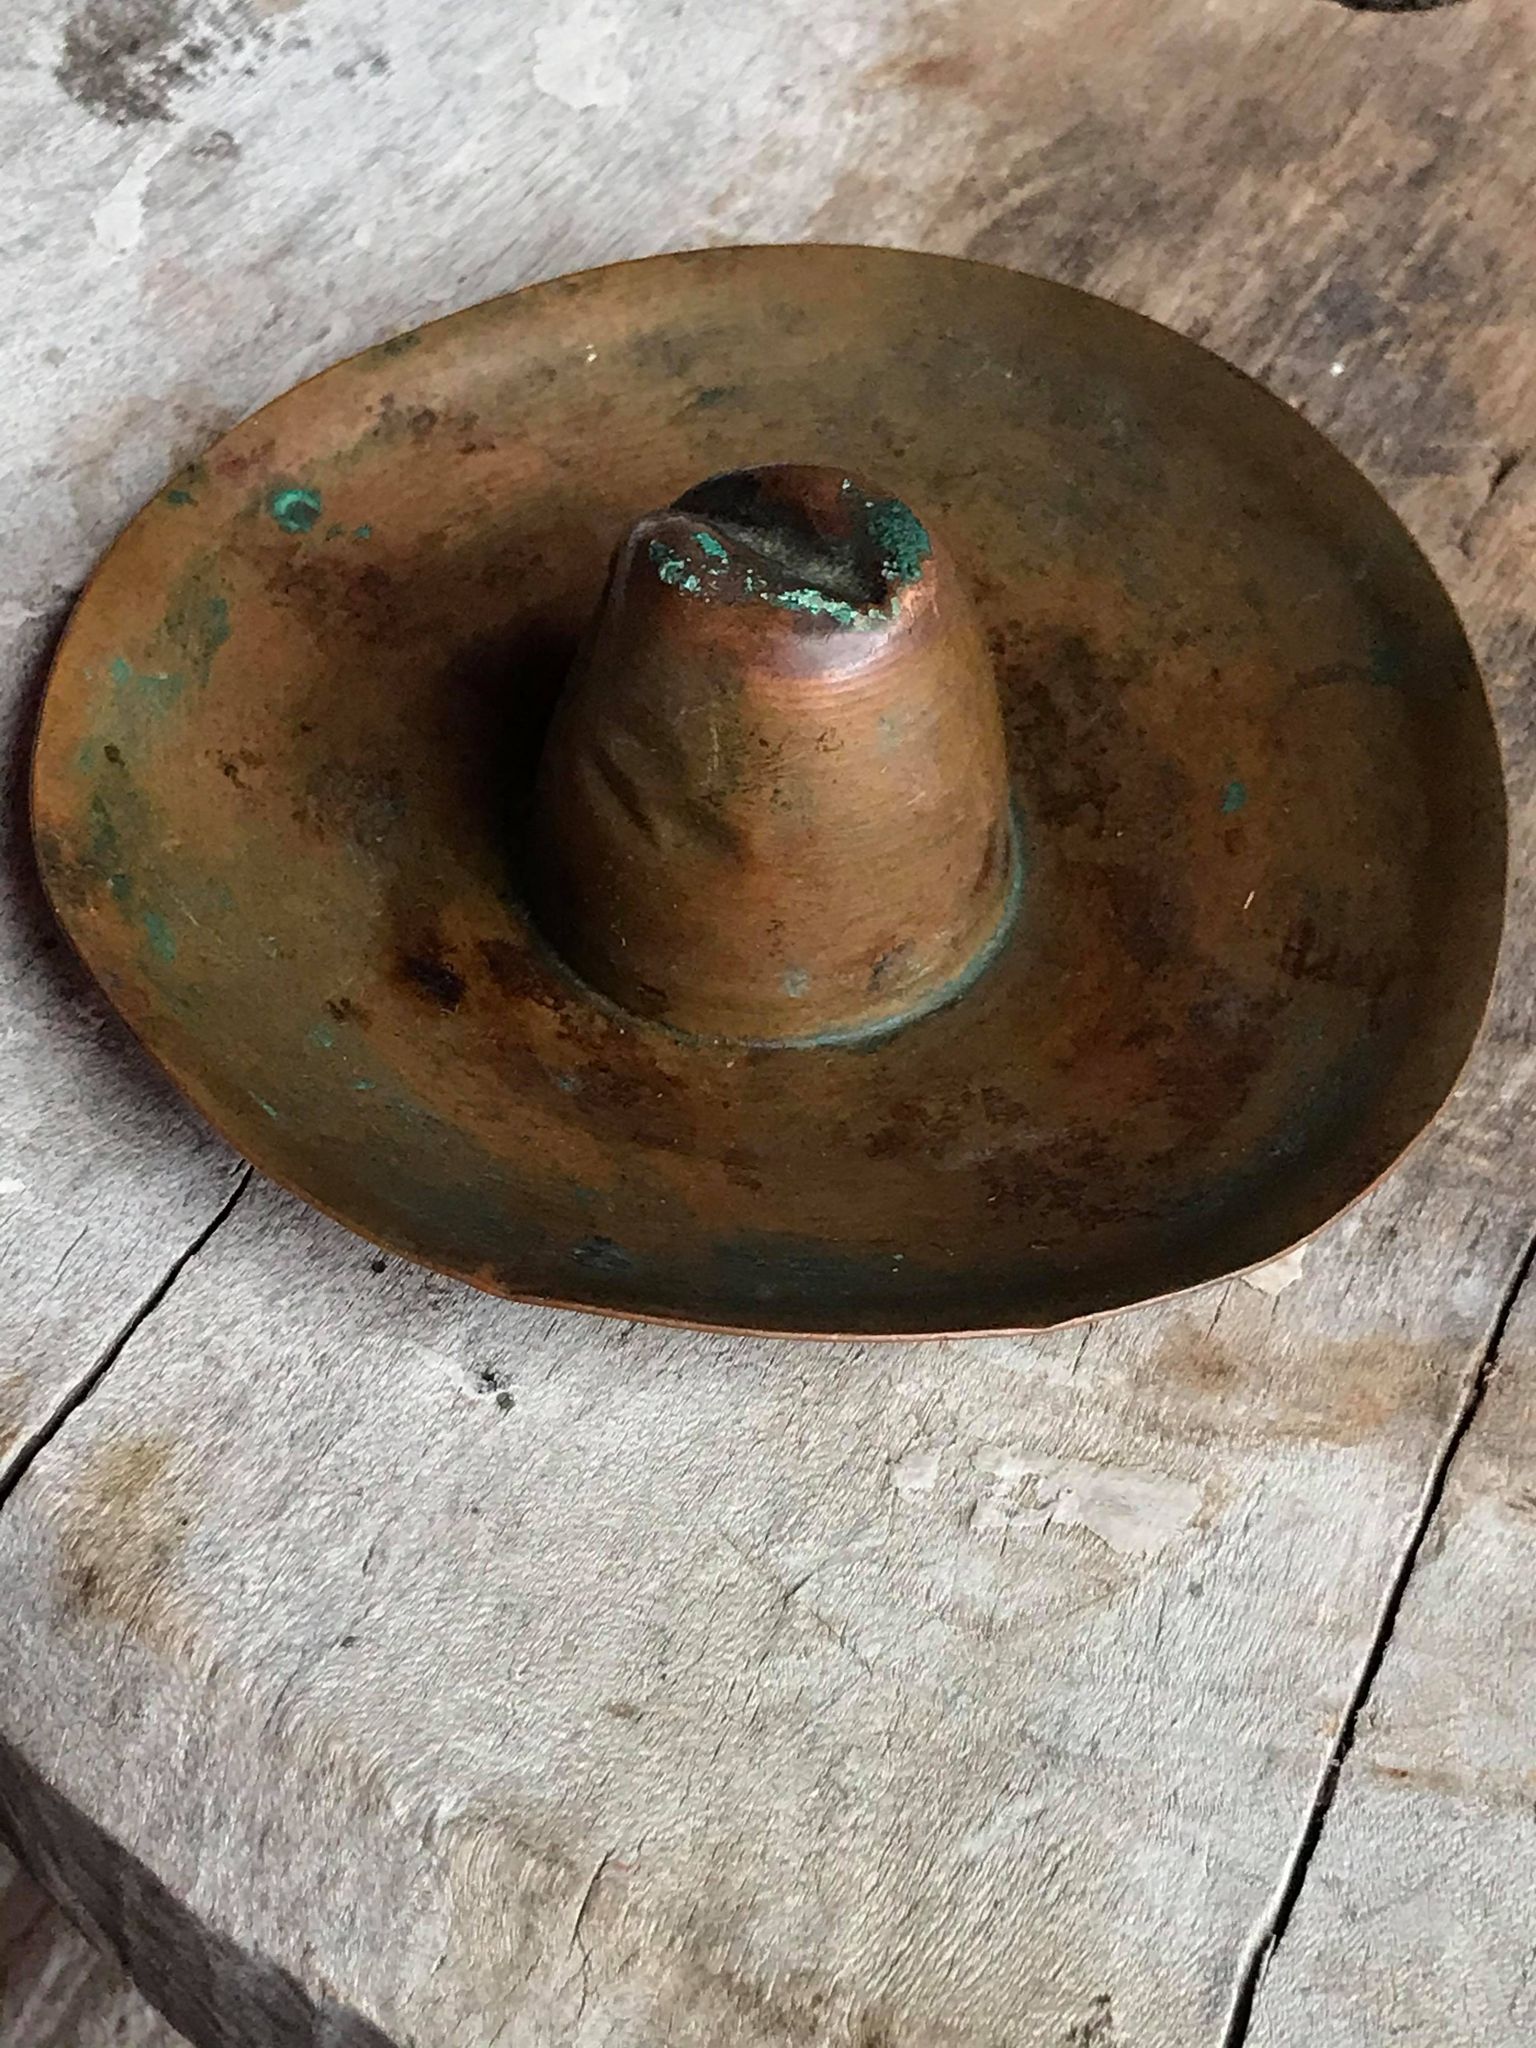 Vintage Cowboy Hat Ashtray